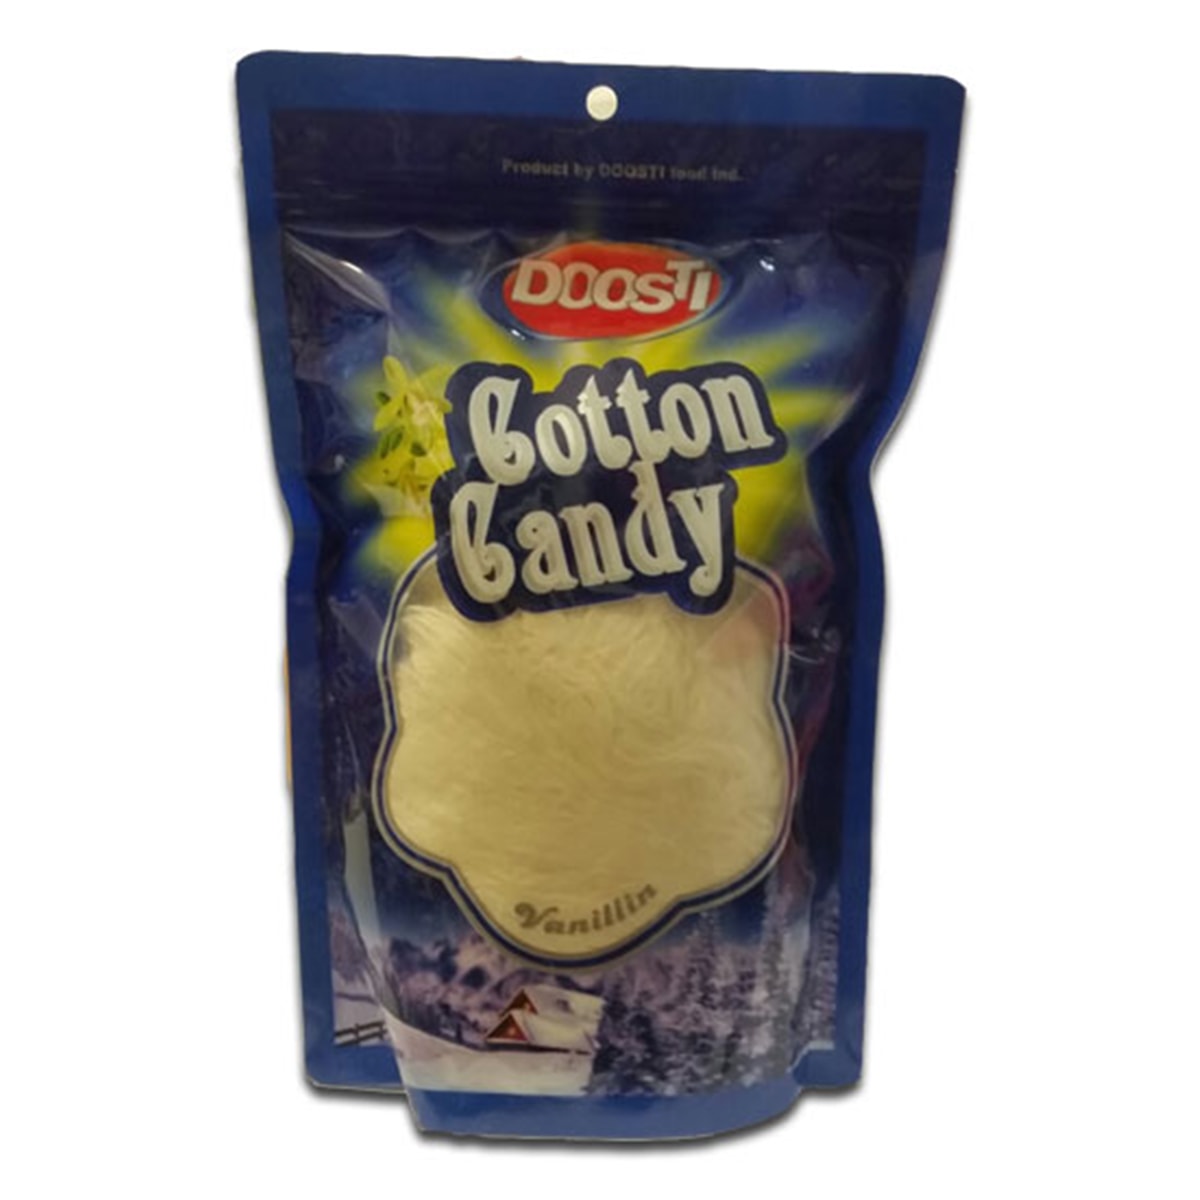 Buy Doosti Persian Fairy Floss or Pashmak or Cotton Candy (White Vanilla) - 350 gm